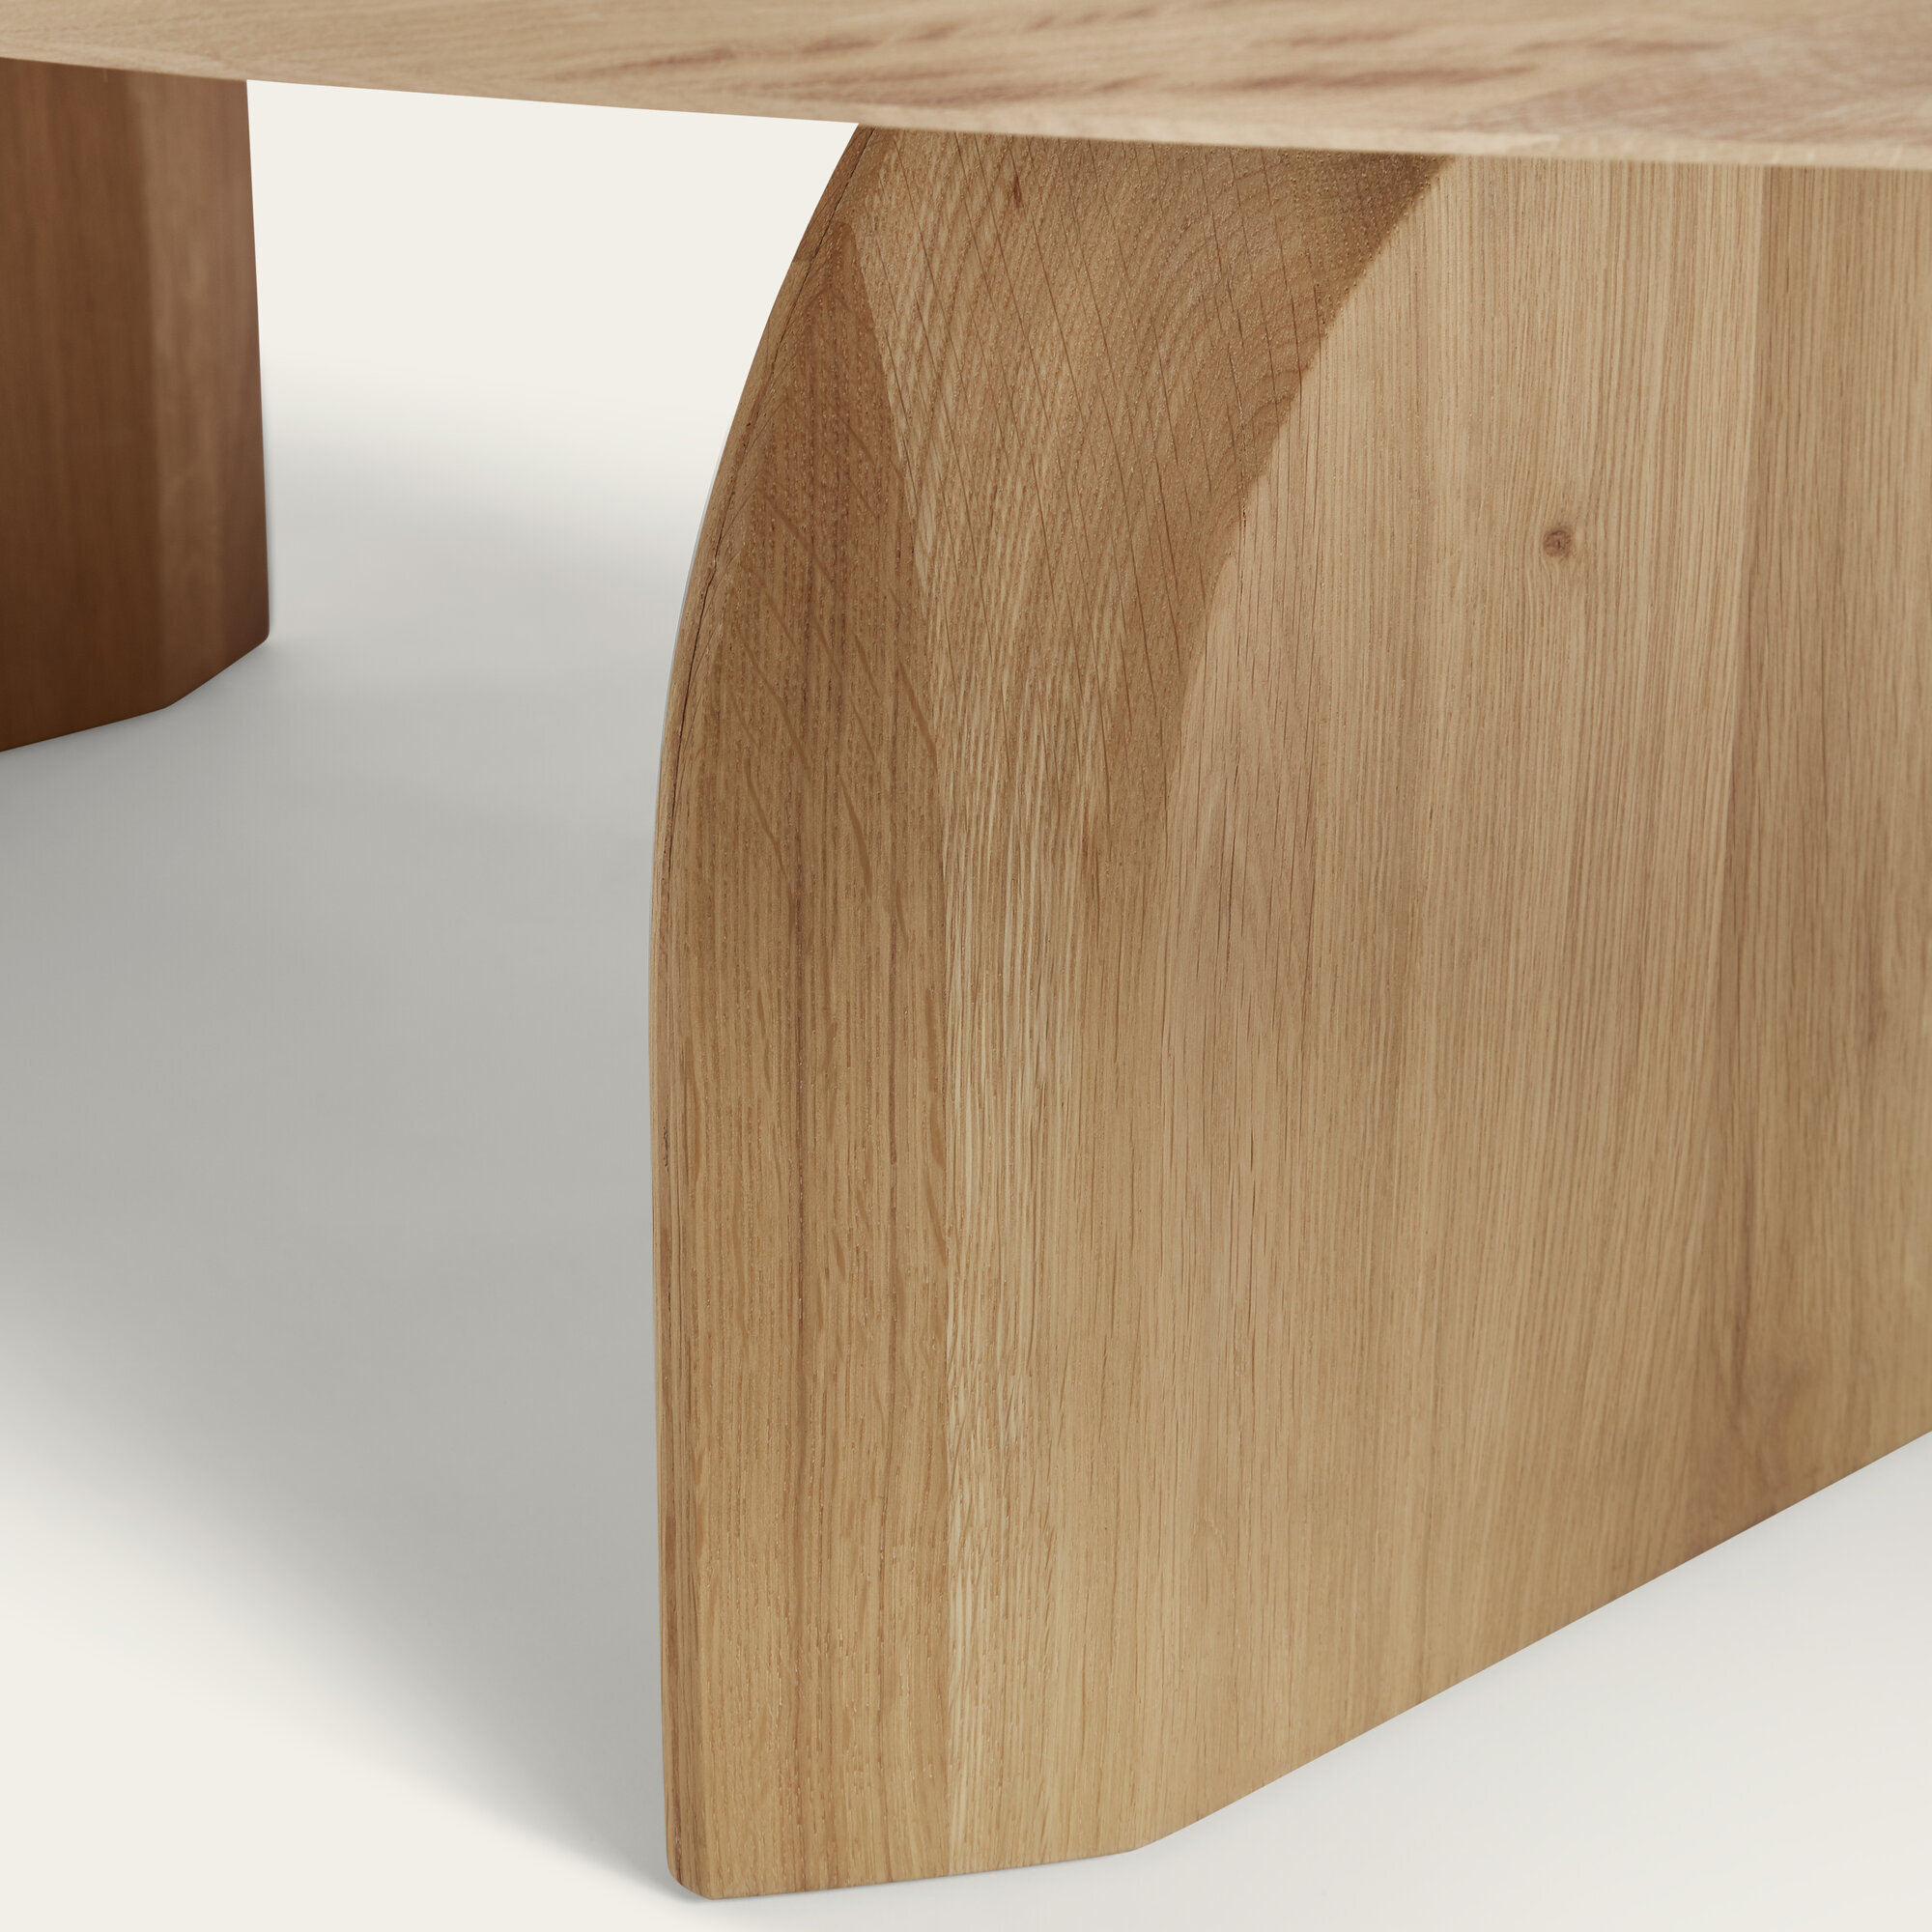 Design Coffee Table | Slot Coffee Table Oak hardwax oil natural light 3041 | Oak hardwax oil natural light 3041 | Studio HENK| 